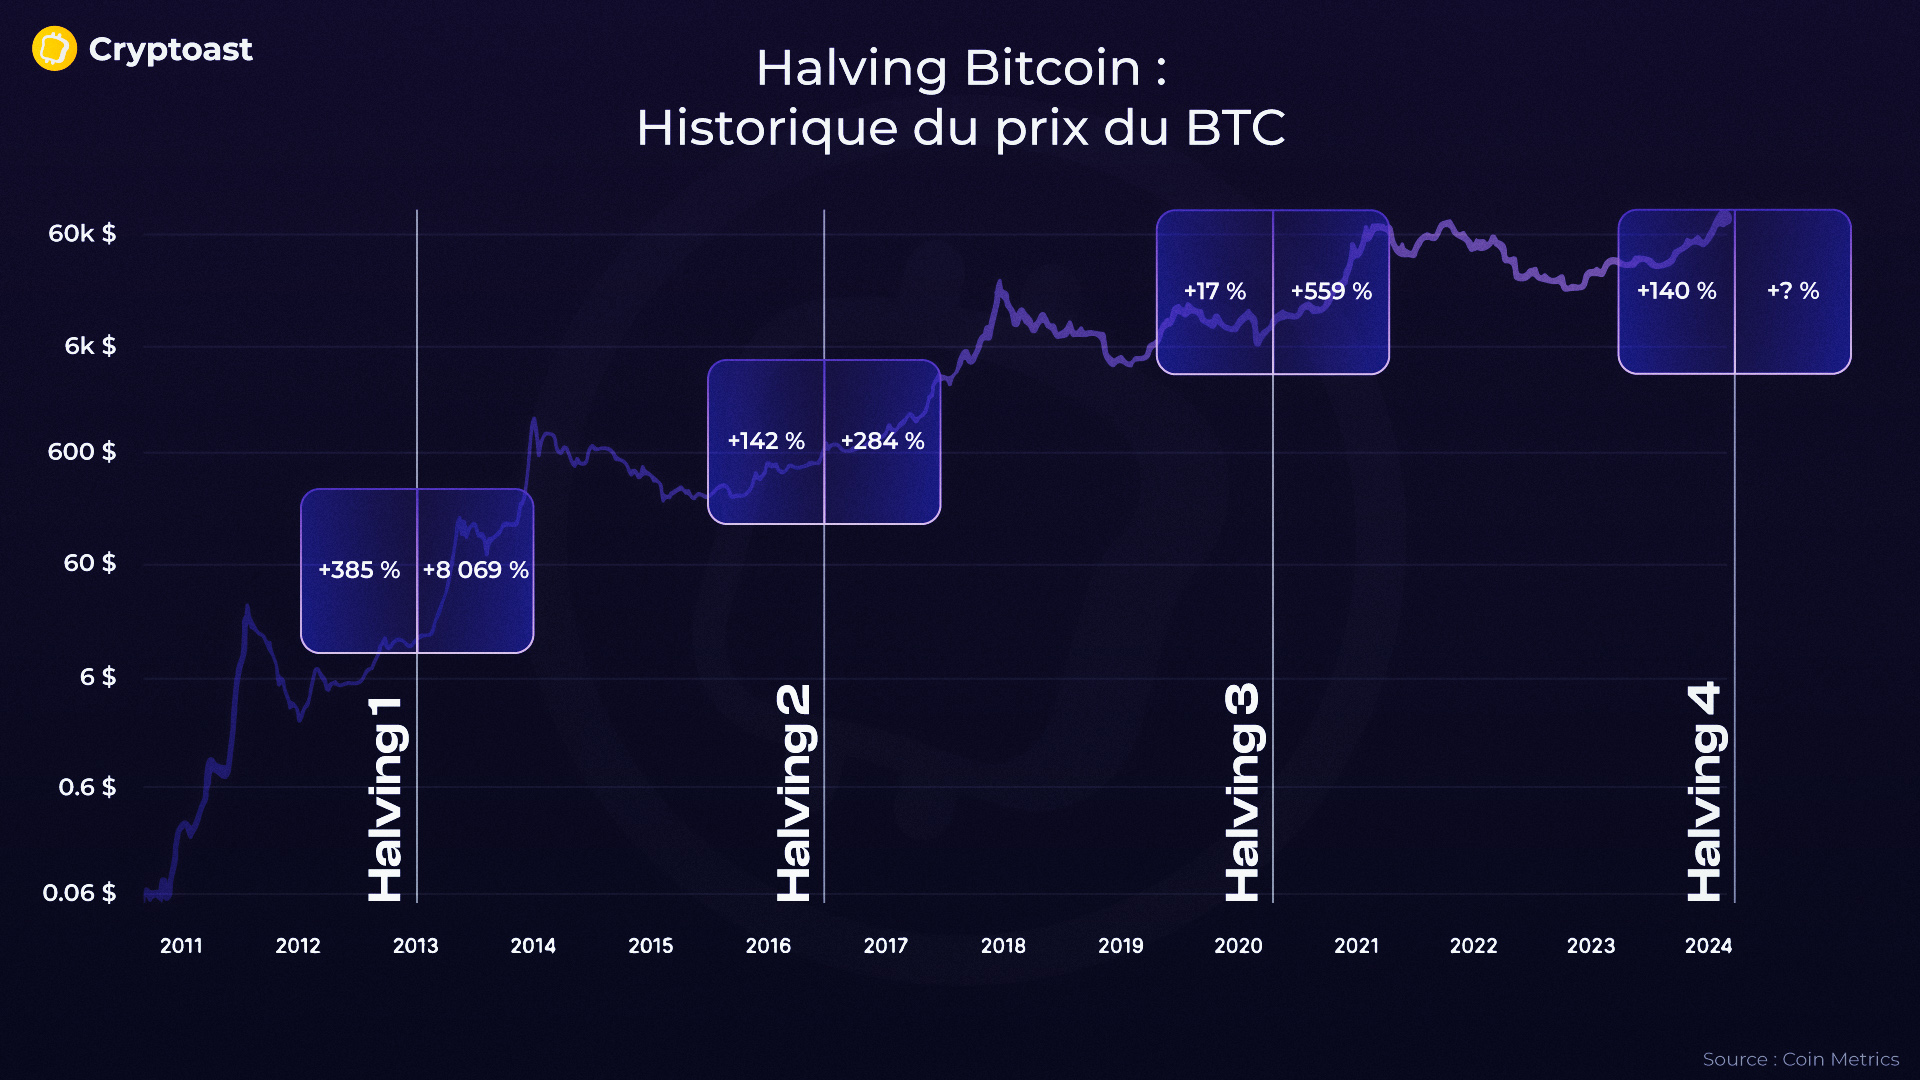 Impact halving Bitcoin